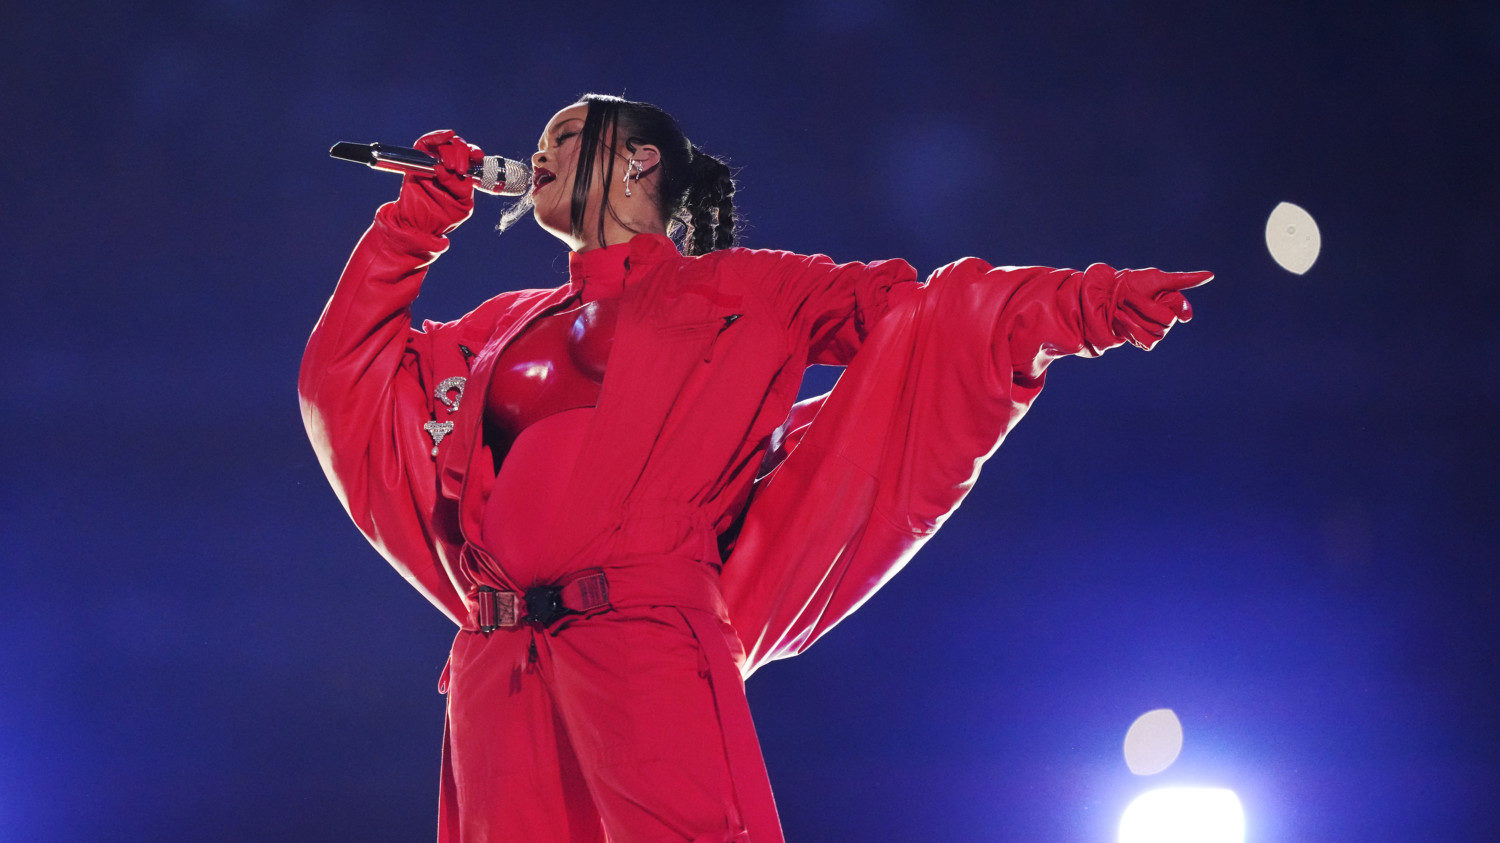 Rihanna performs during Super Bowl halftime show